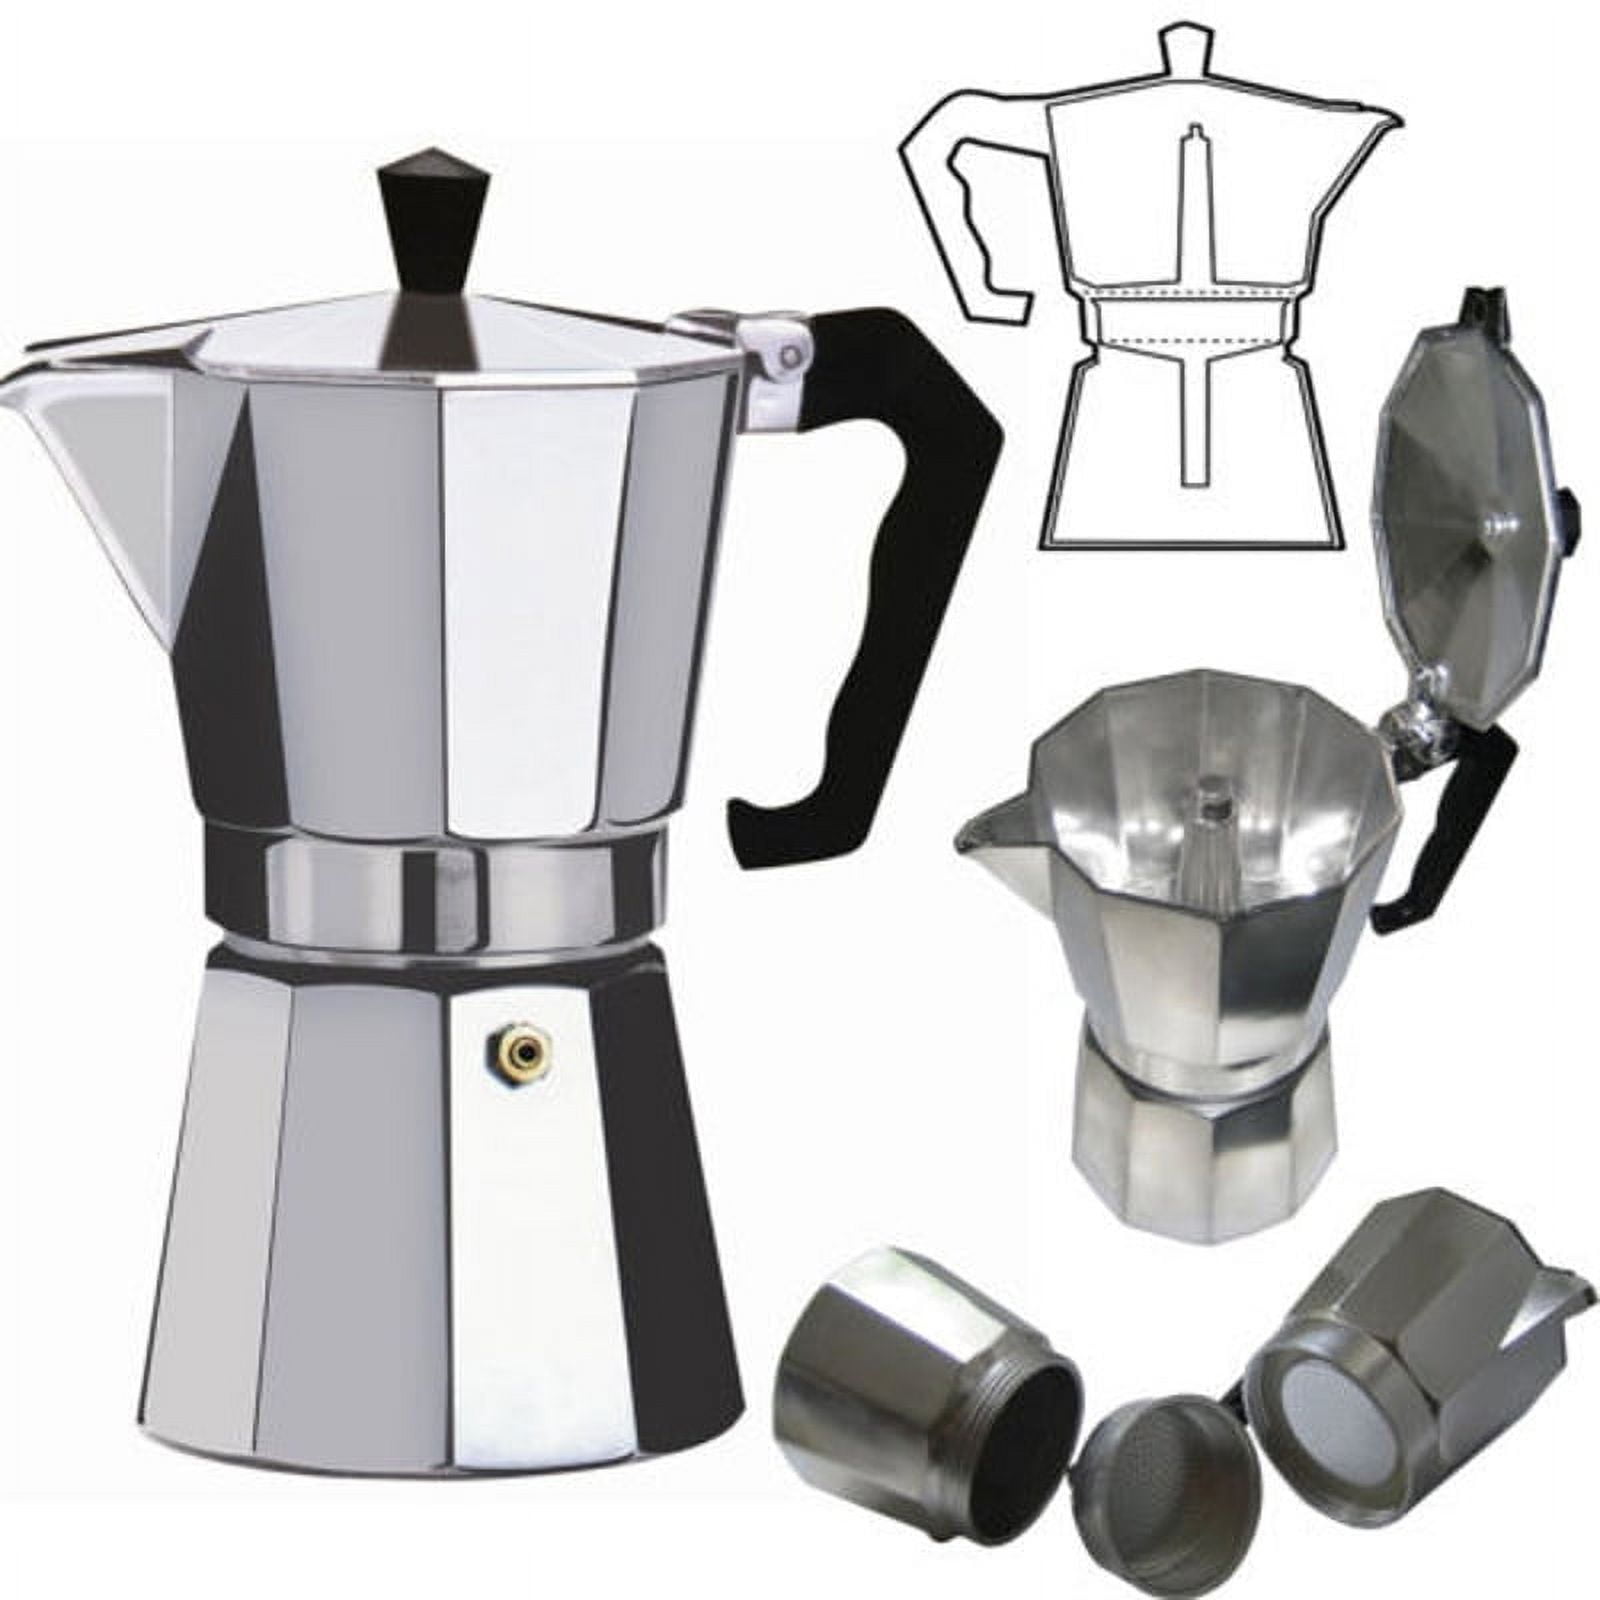 J&V Textiles Stovetop Espresso and Coffee Maker, Moka Pot for Classic Italian and Cuban Café Brewing, Cafeteria